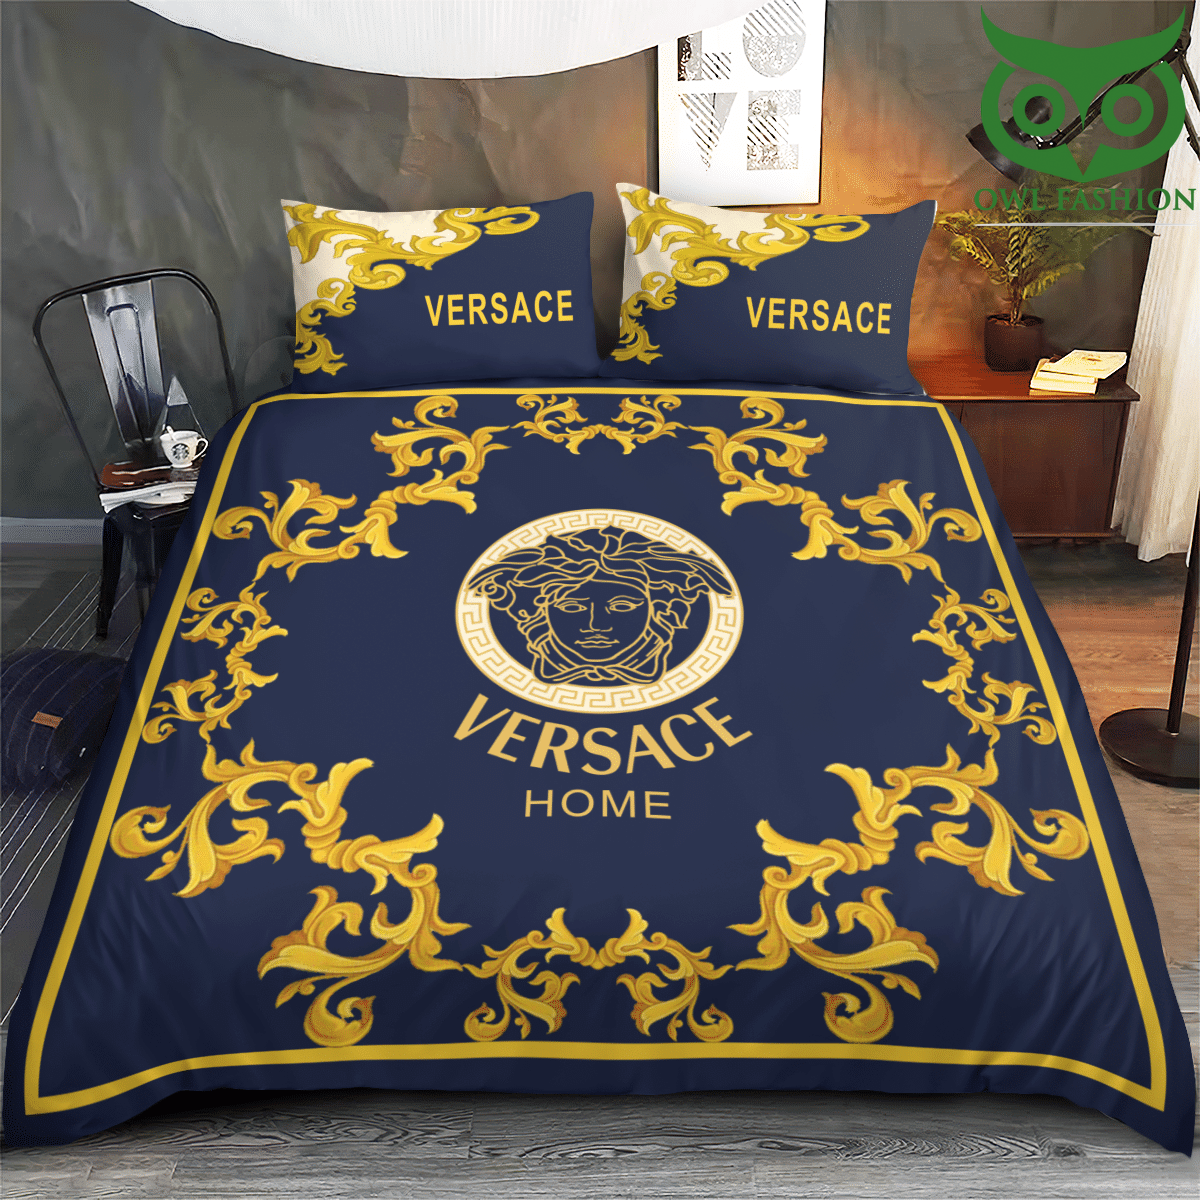 11 Versace Home royal bedding set